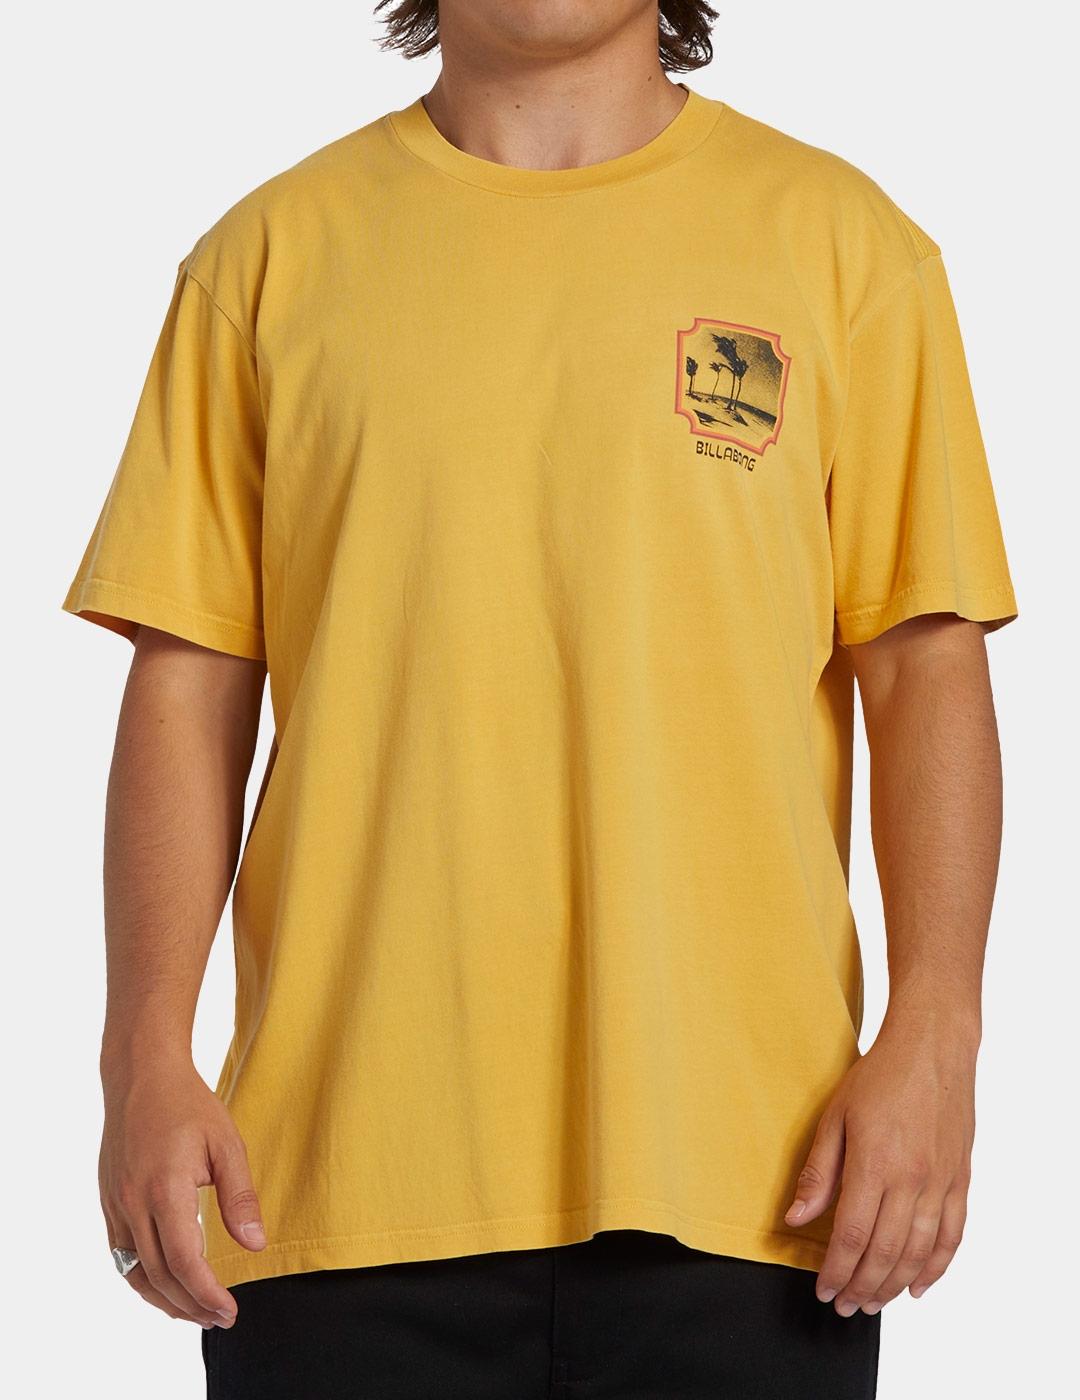 Camiseta BILLABONG REFLECTIONS - Citrus